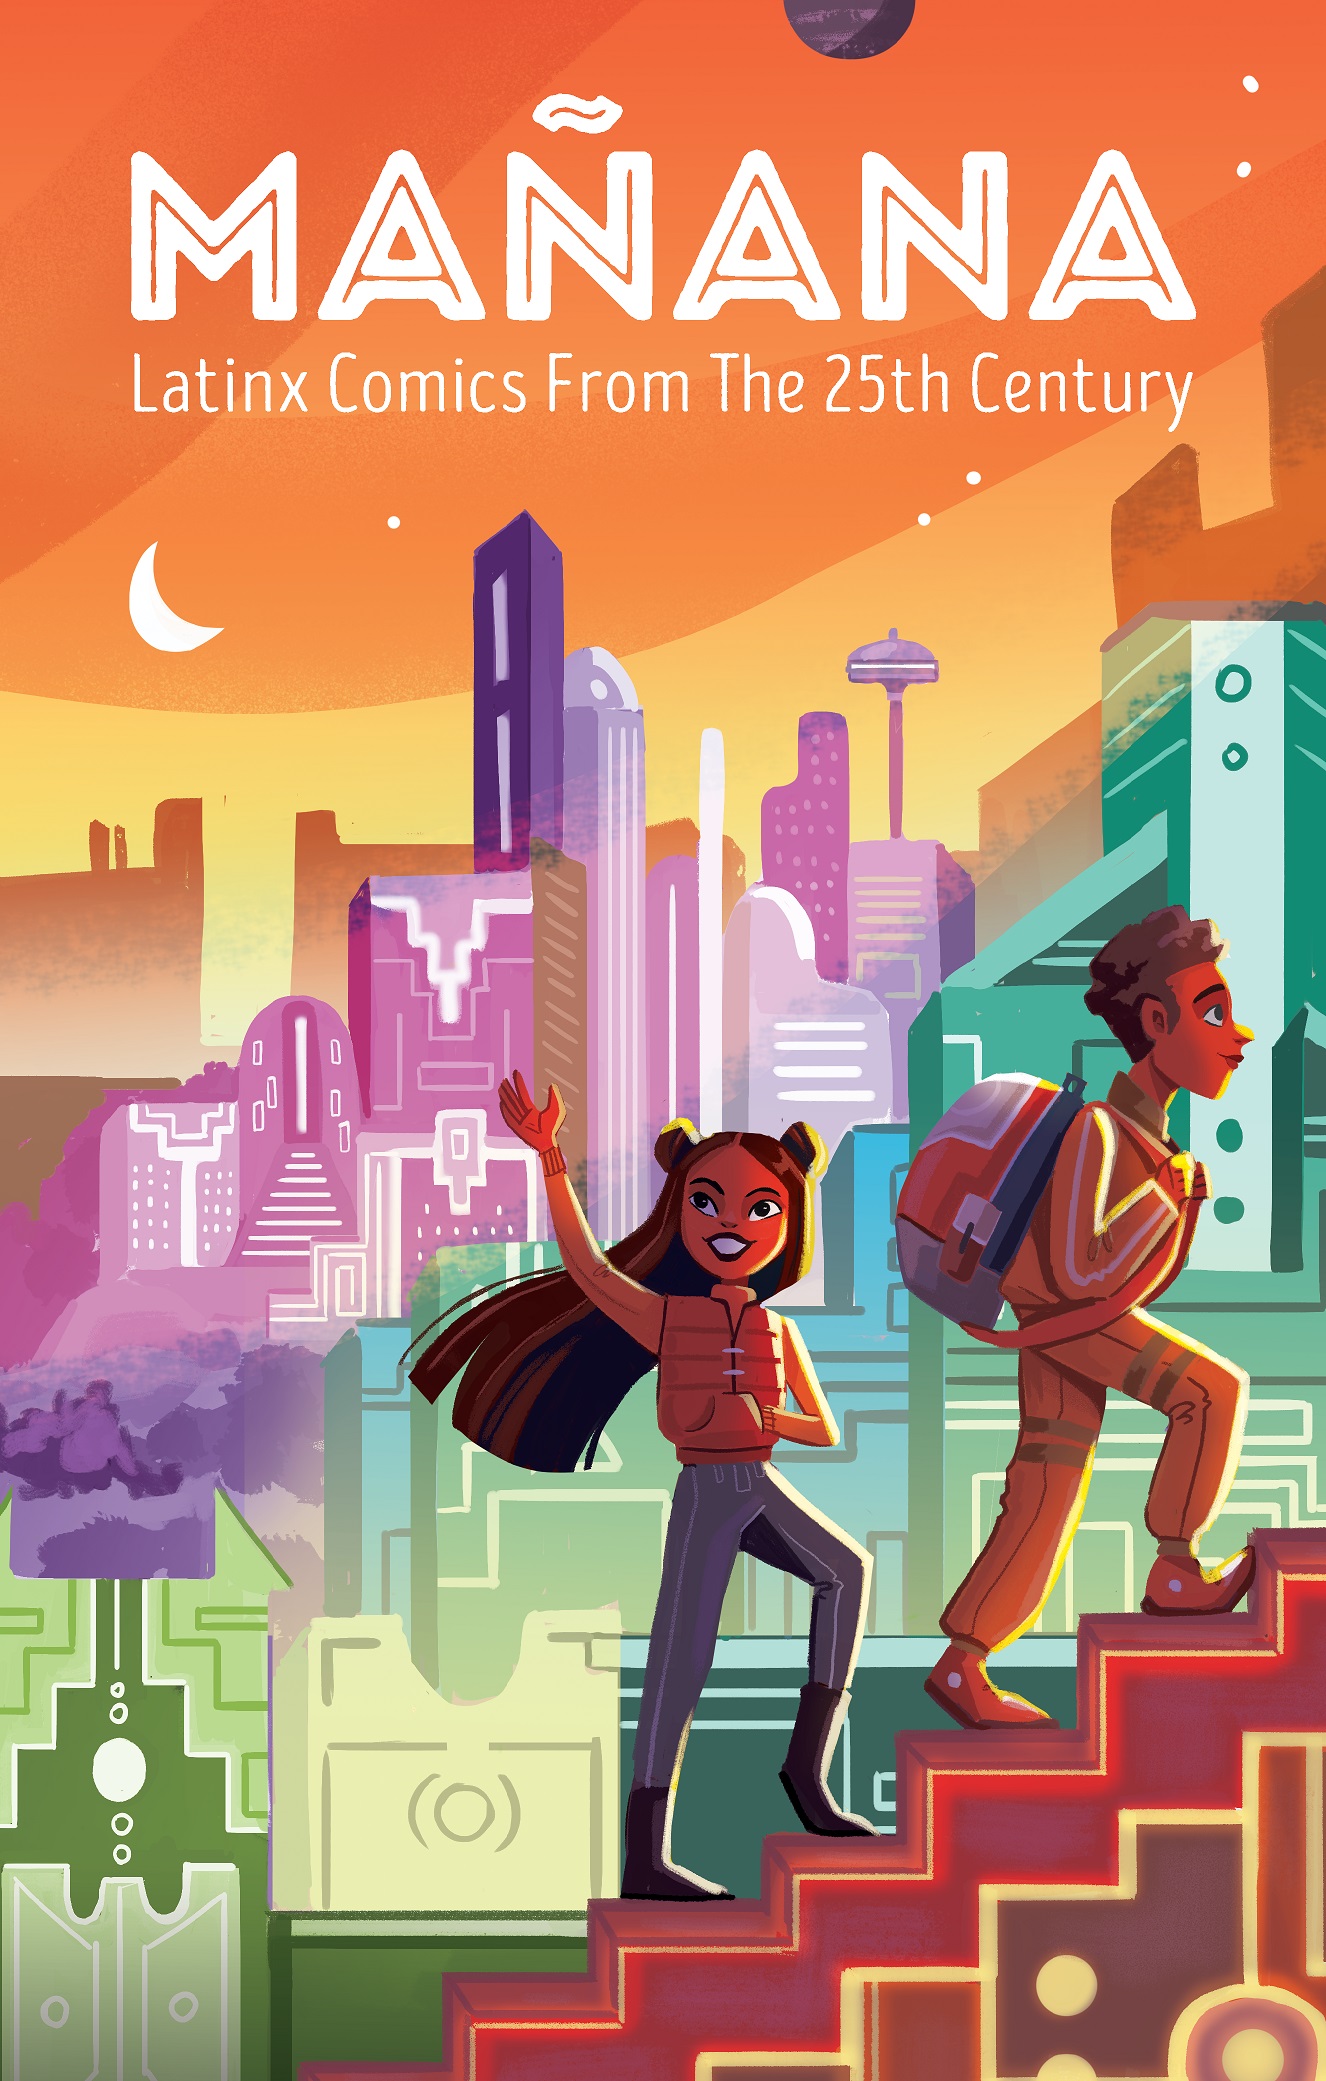 Mañana: Latinx Comics From the 25th Century edited by Joamette Gil